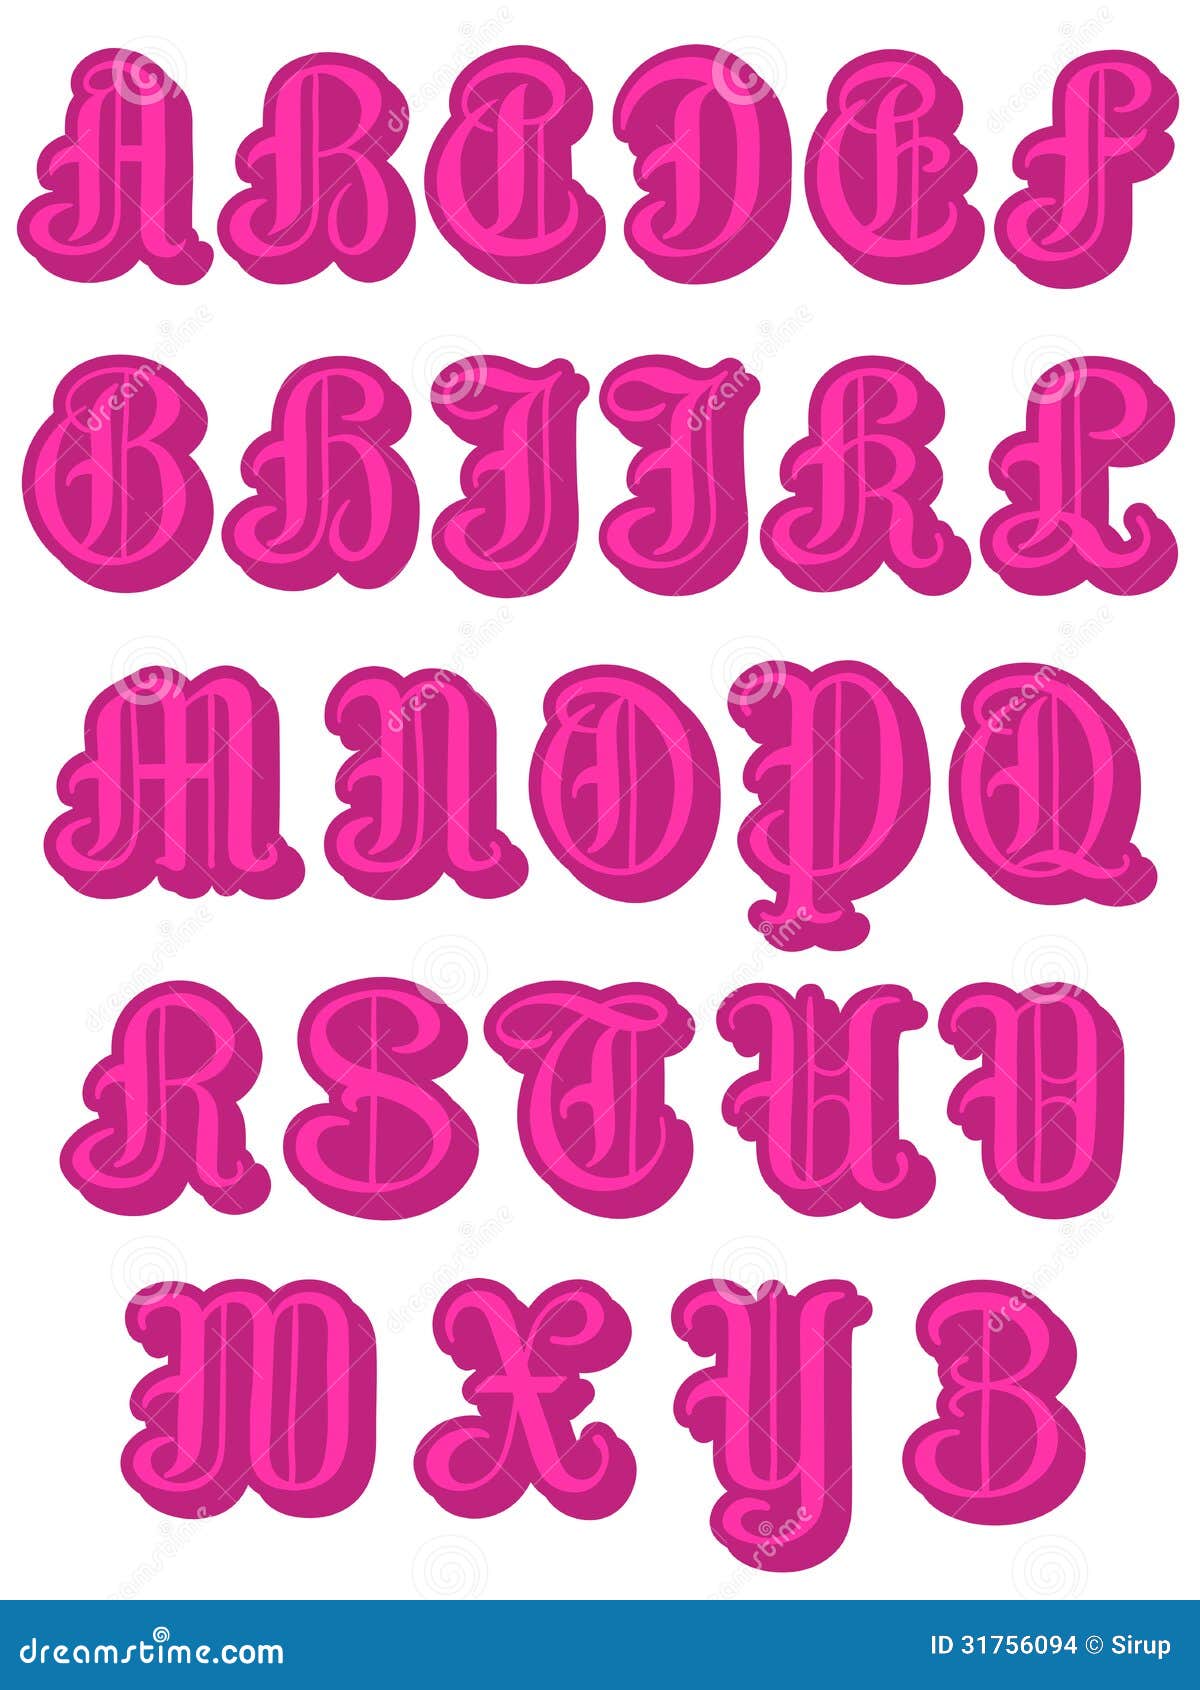 complete alphabet in pink round capitals